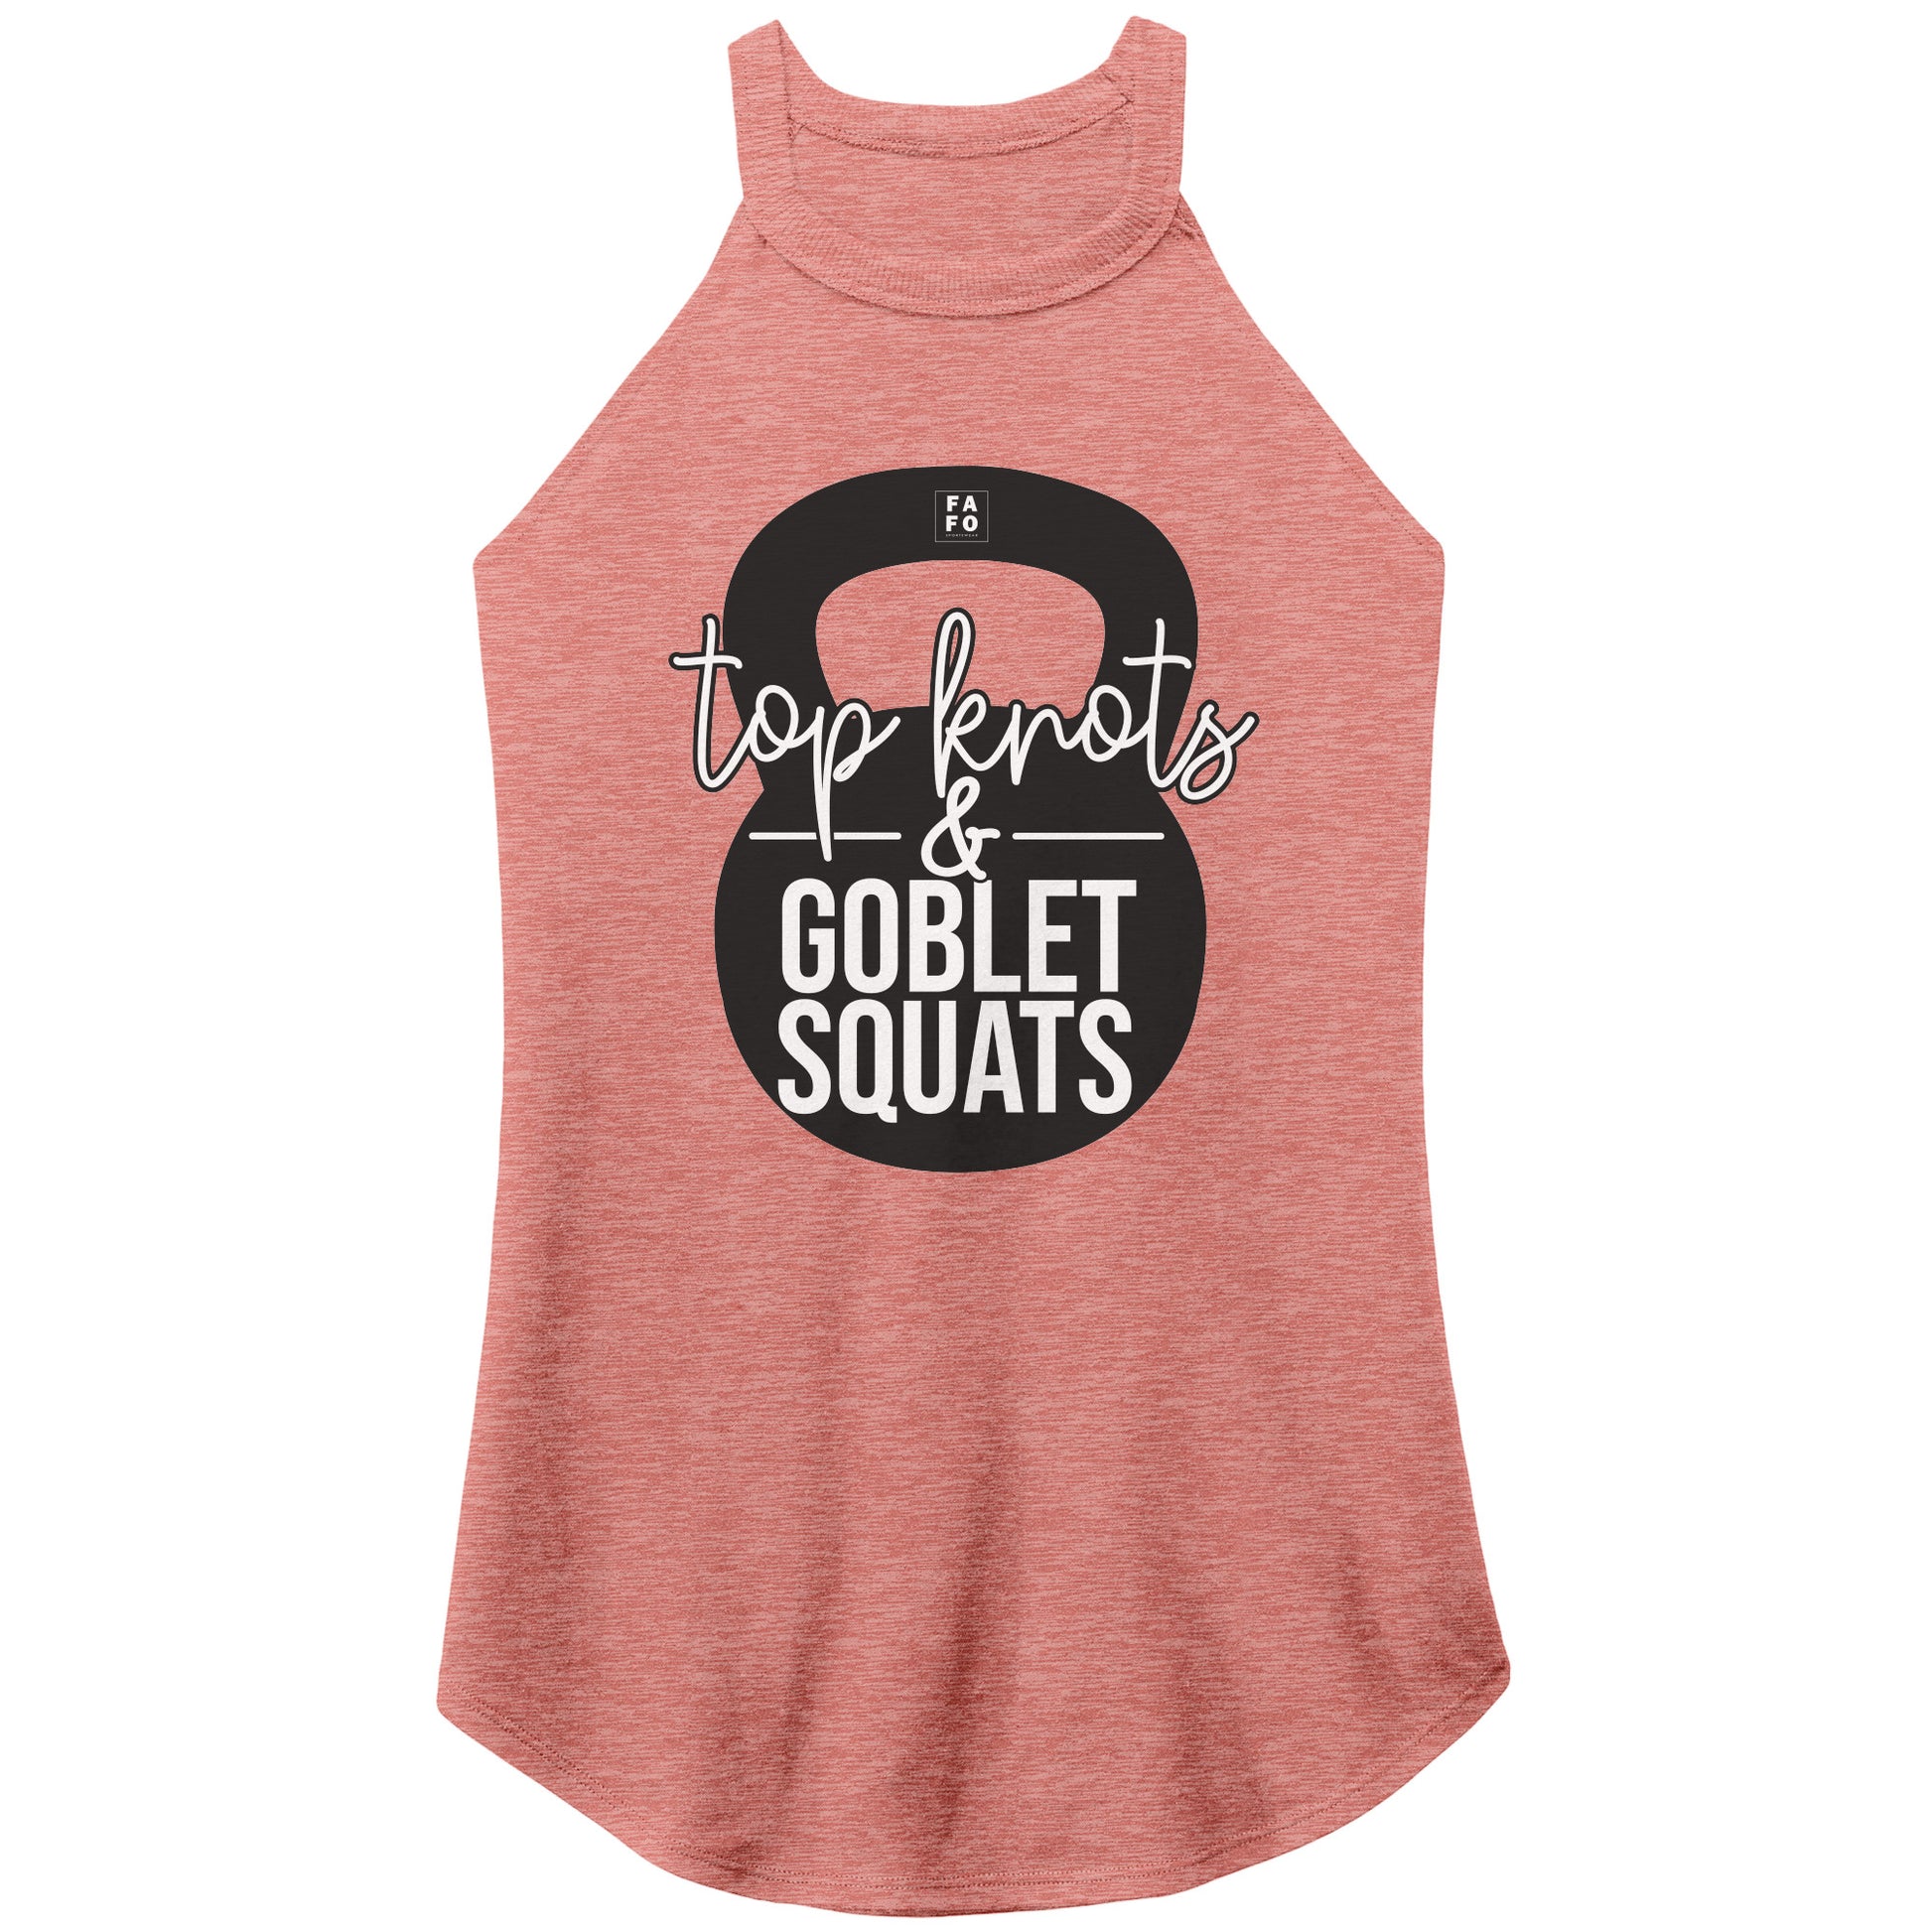 Rocker Tank - Goblet Squats - Blush Pink